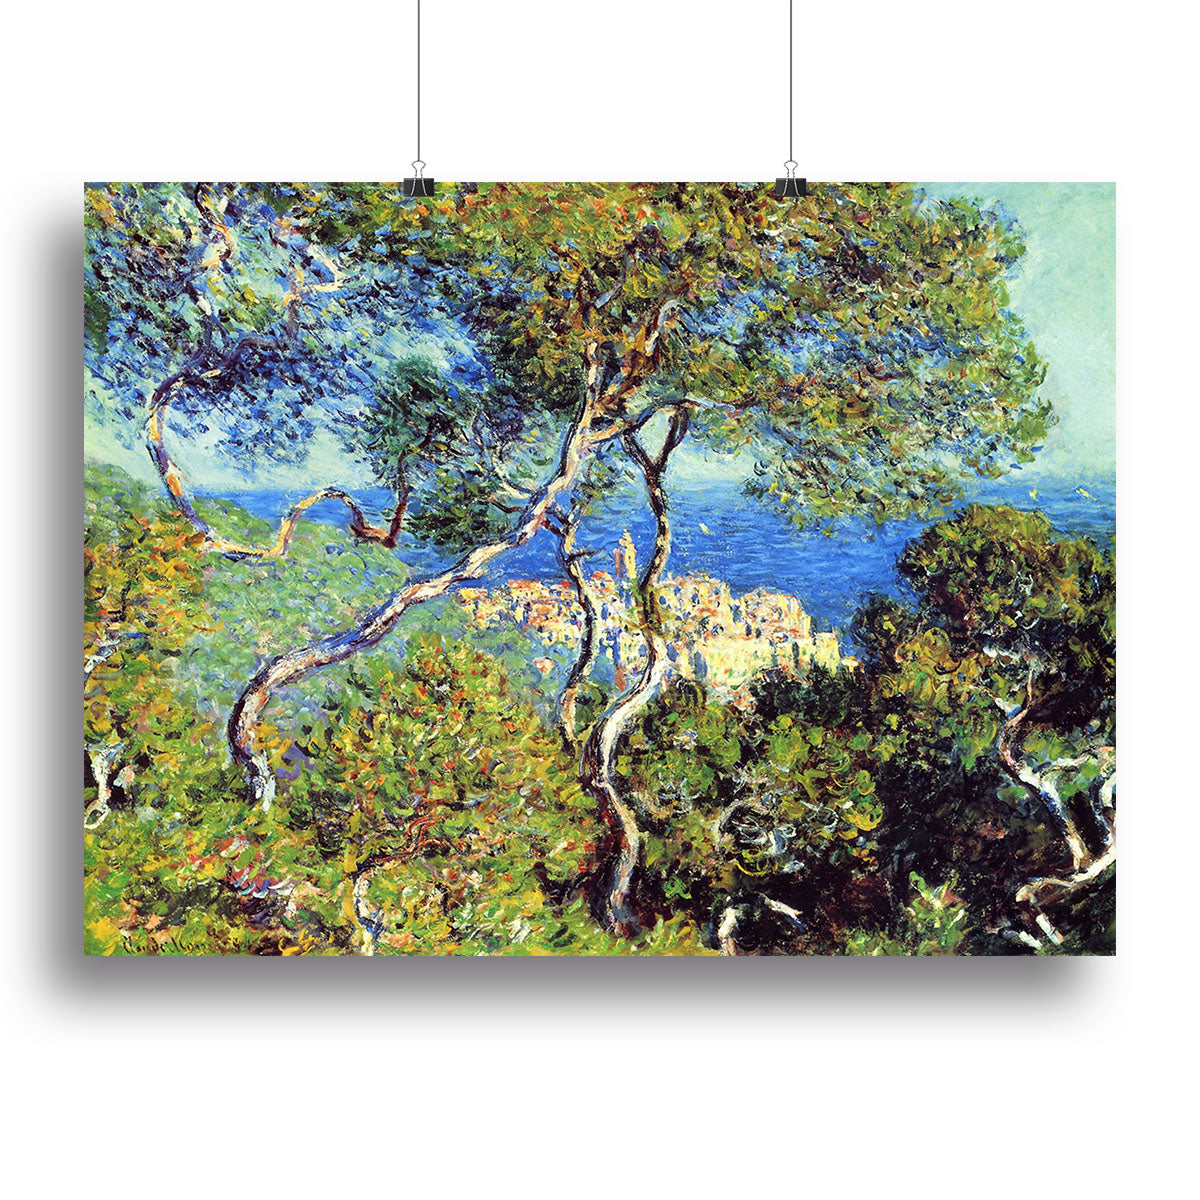 Bordighera by Monet Canvas Print or Poster - Canvas Art Rocks - 2